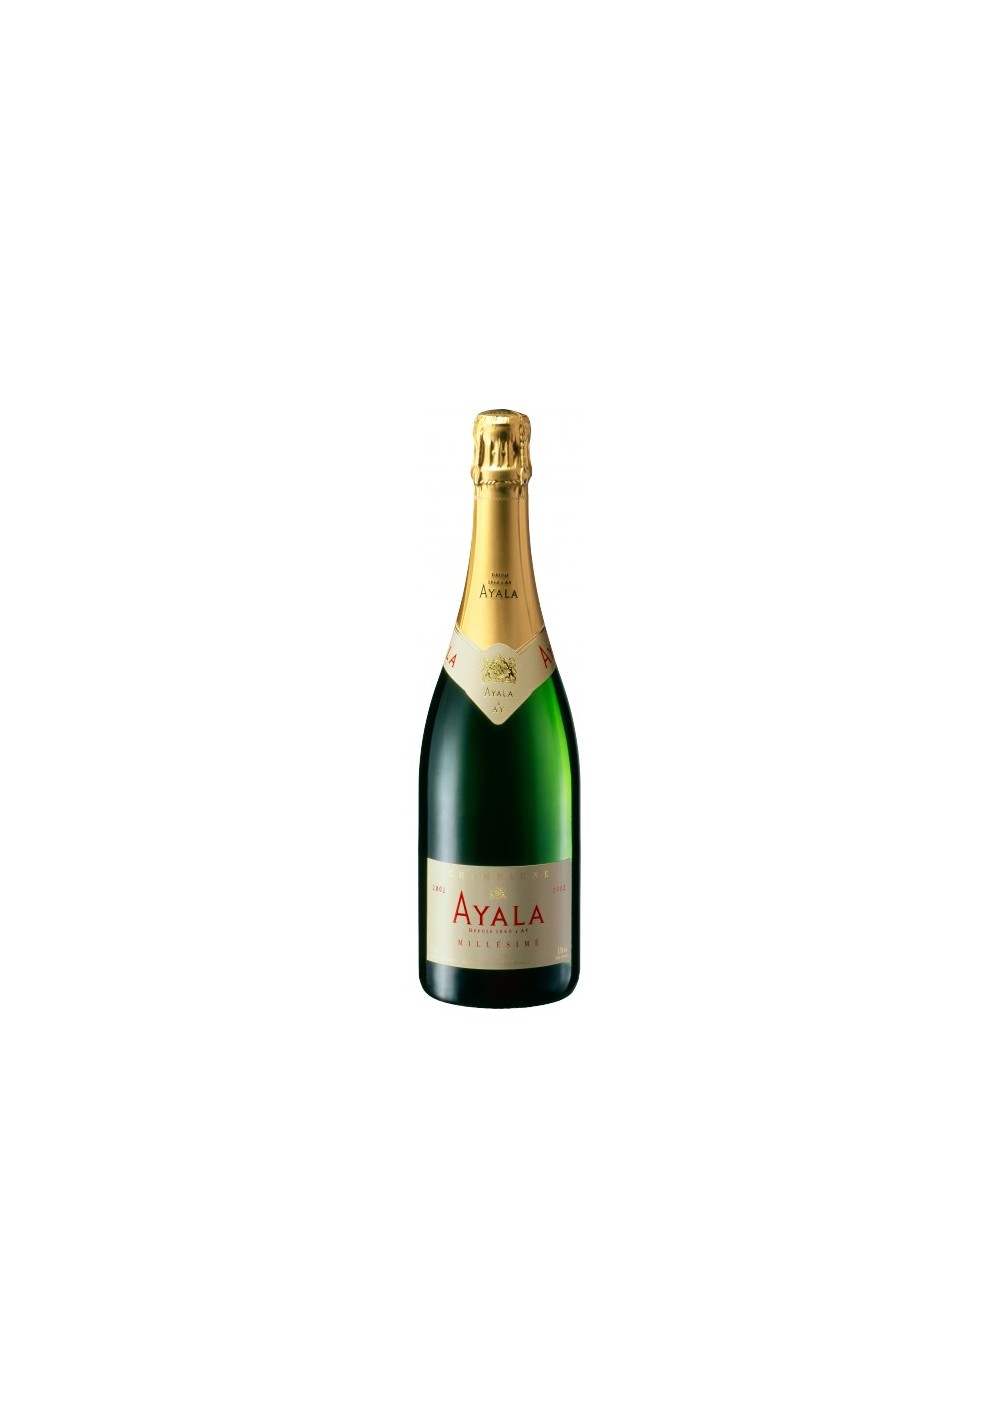 Champagne Ayala Brut Millésimé 2002